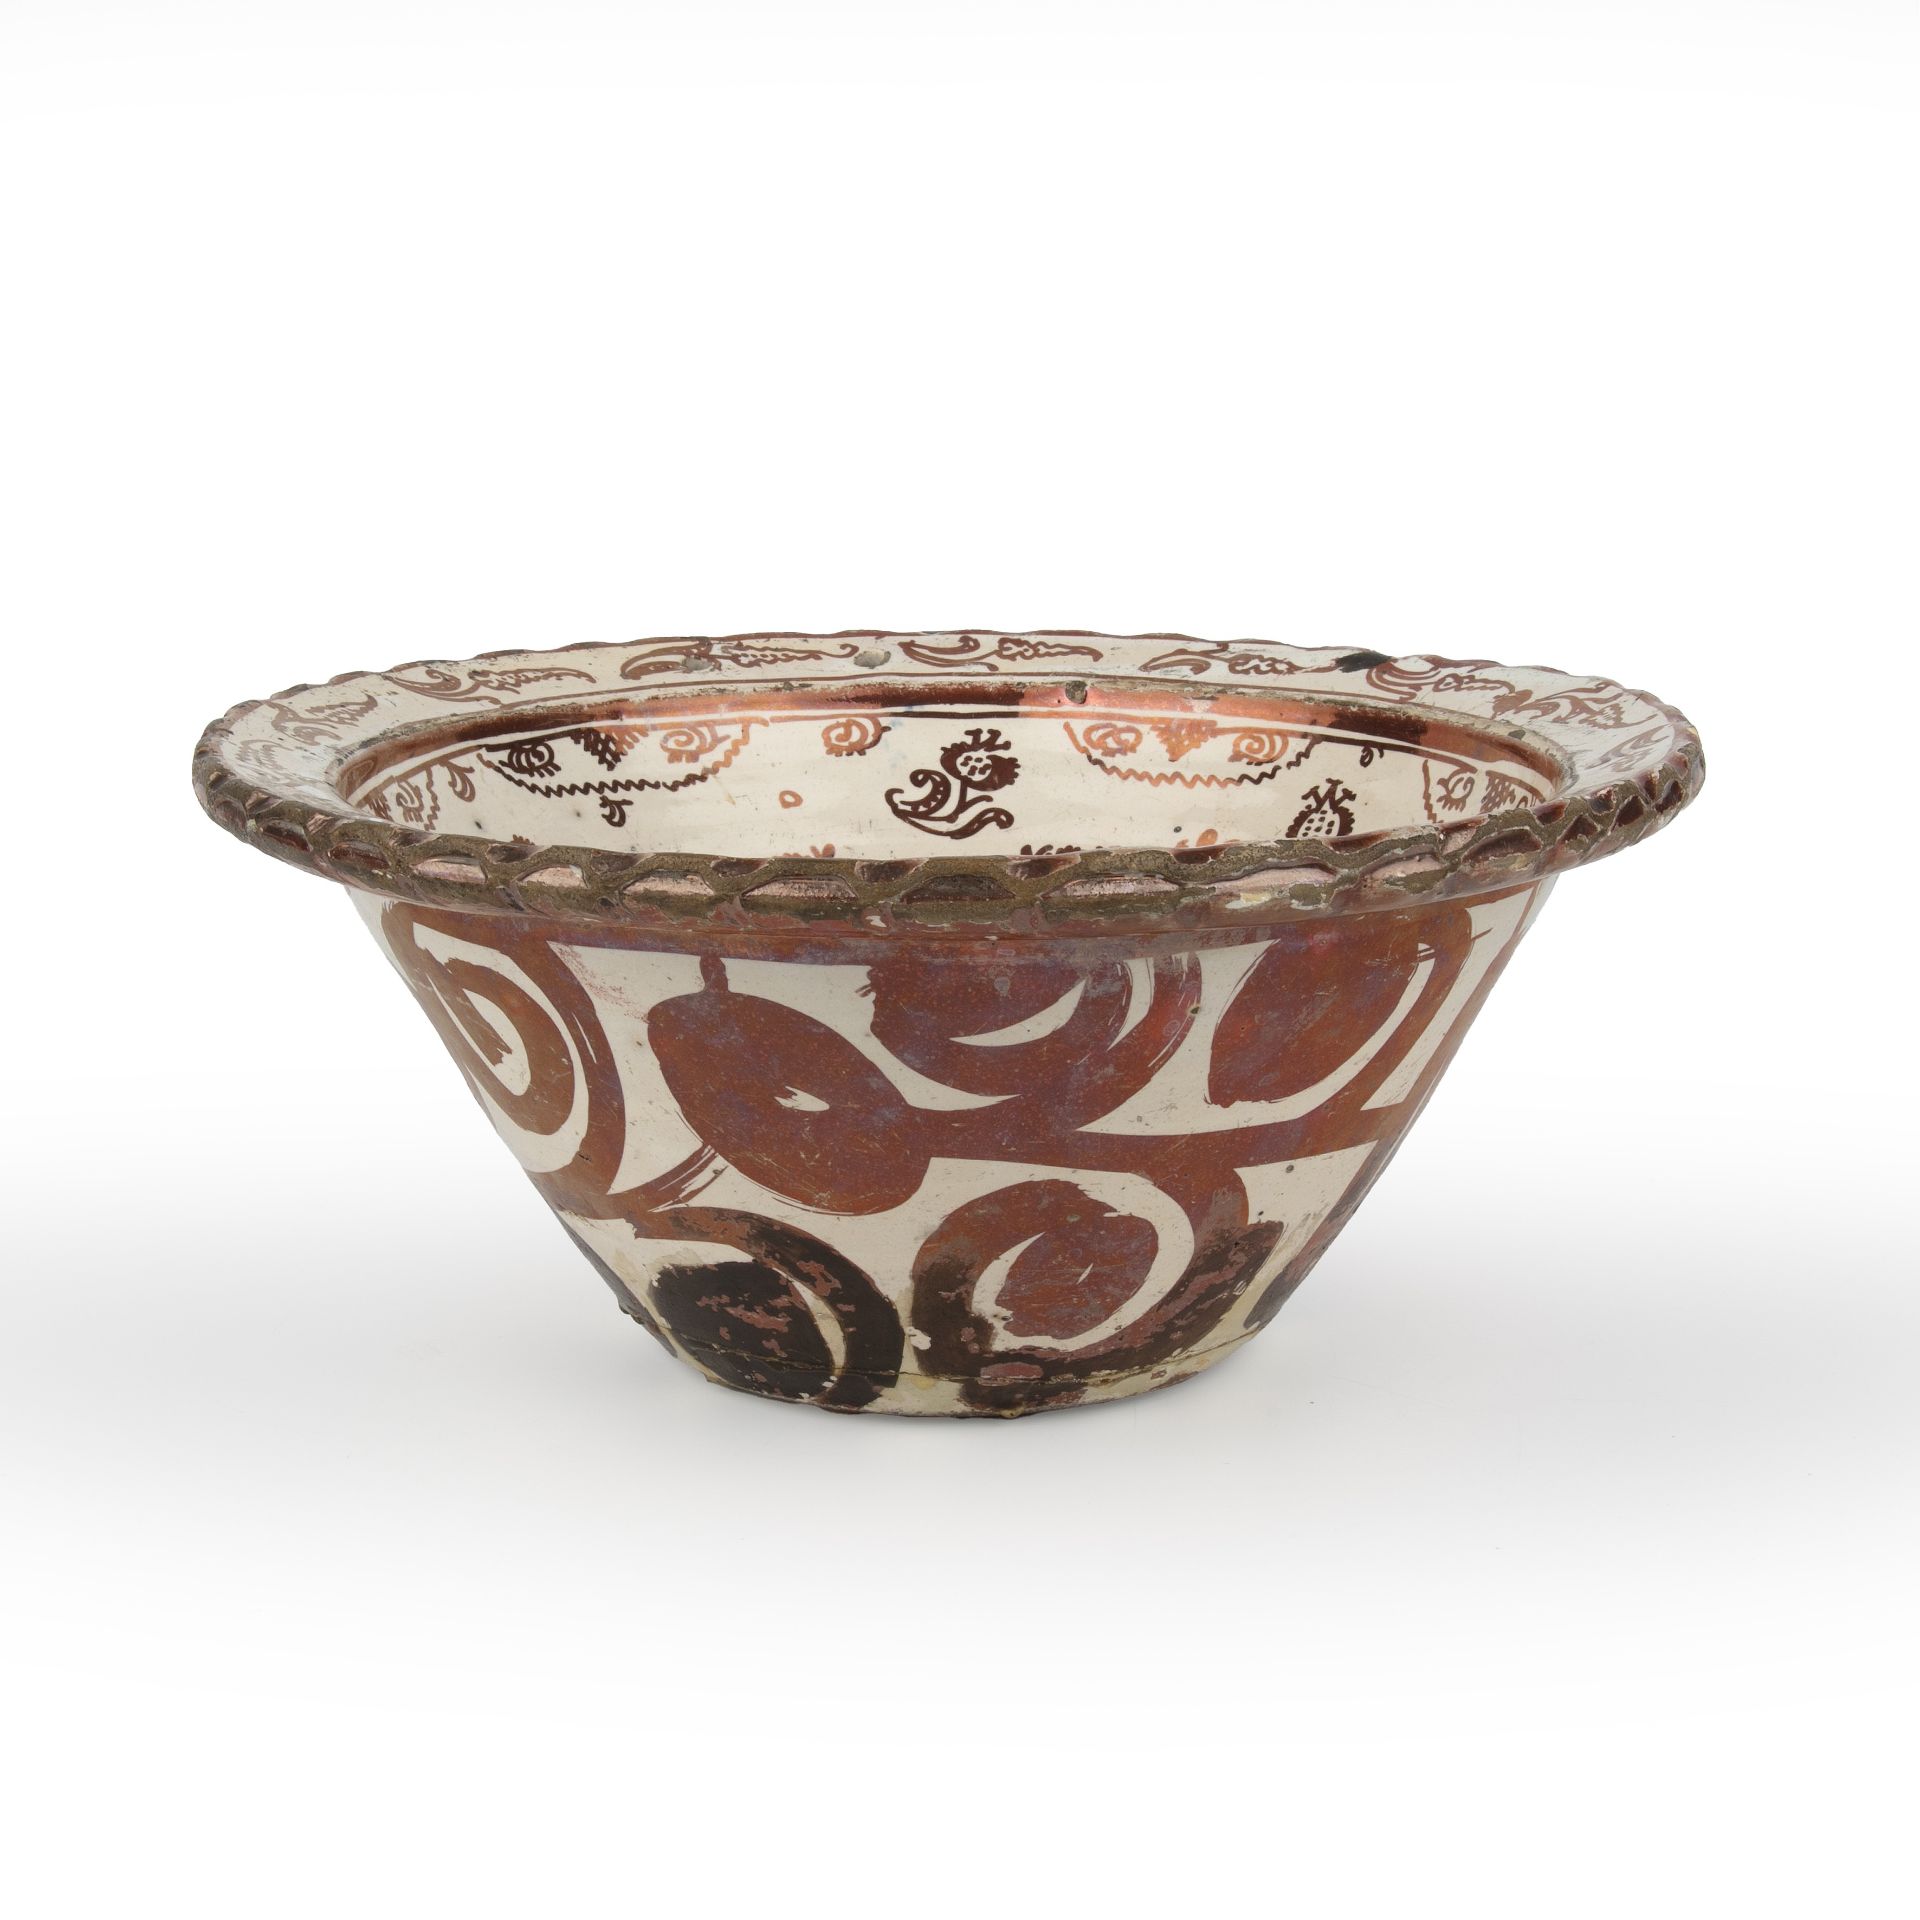 A 17th/18th century Hispano-Moresque copper lustre bowl with foliate decoration, 30cm diameter 12. - Image 3 of 4